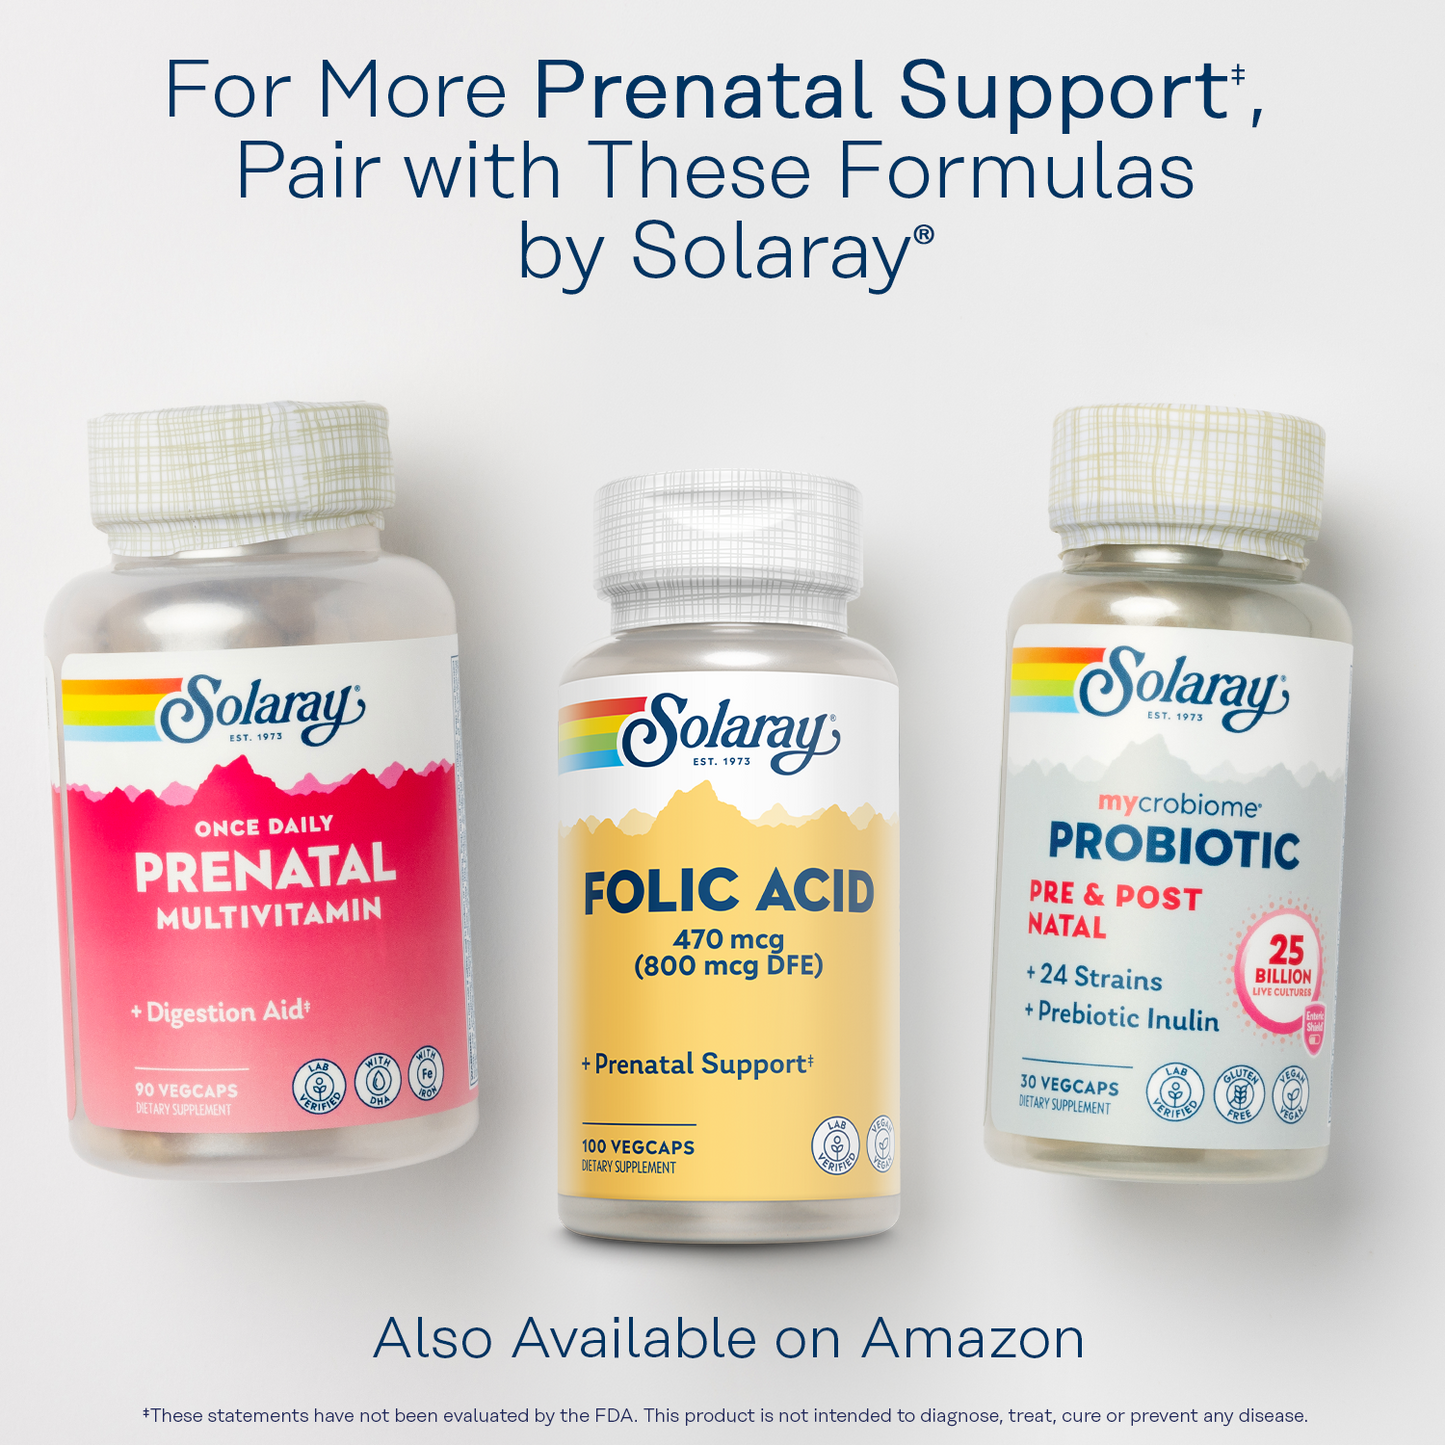 Solaray Folic Acid - Vitamin B9 Folic Acid Supplement, Prenatal Vitamin - Blood Cell Development Support - Vegan, Lab Verified, 60-Day Guarantee - 100 Servings, 100 VegCaps